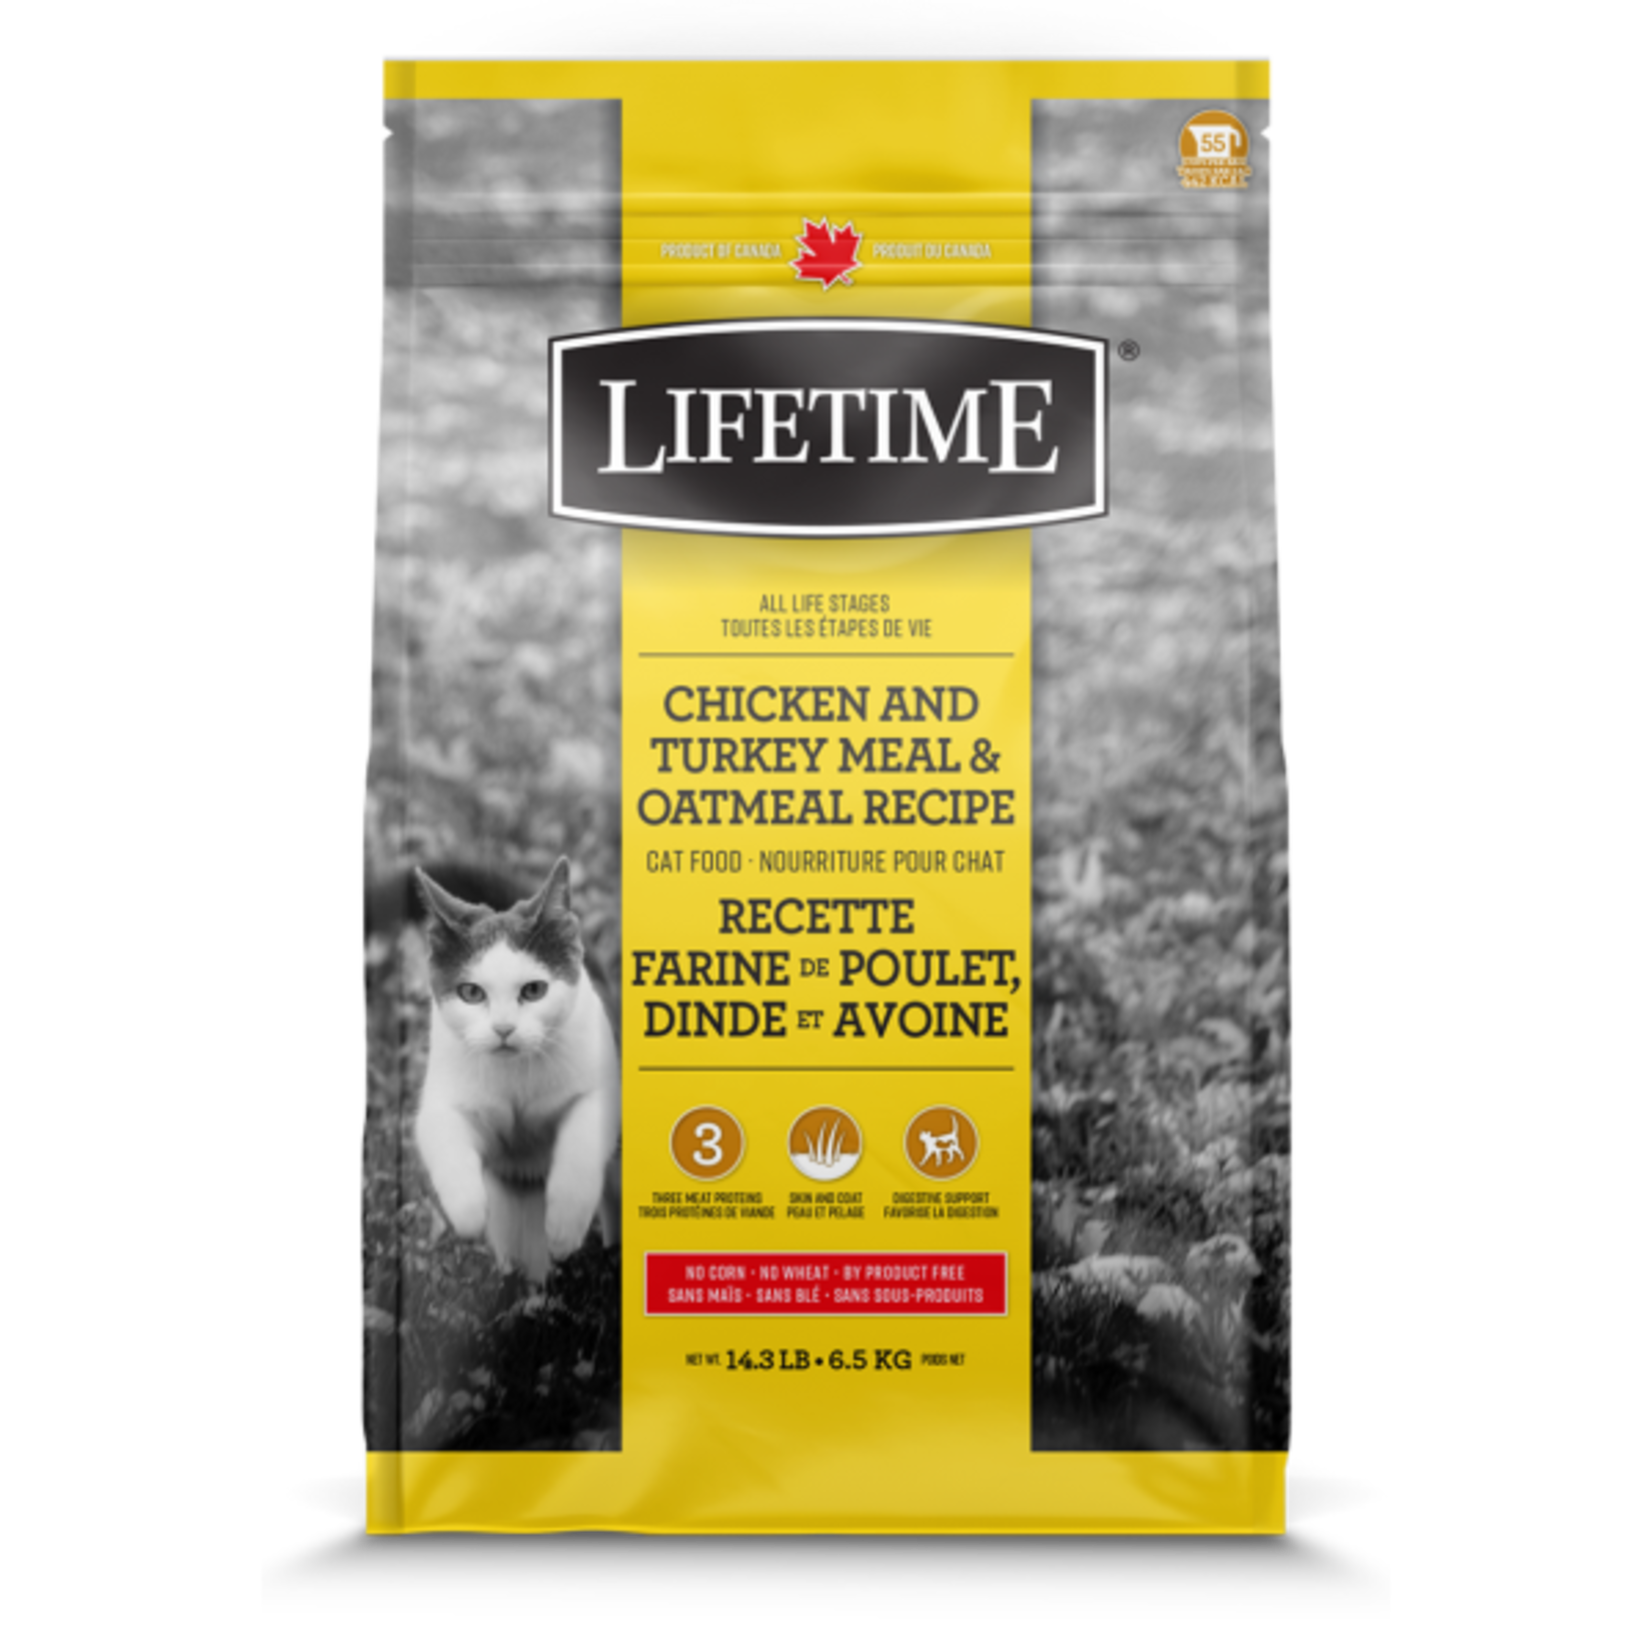 Lifetime Lifetime Cat ALS Chicken Turkey & Oatmeal 6.5 kg